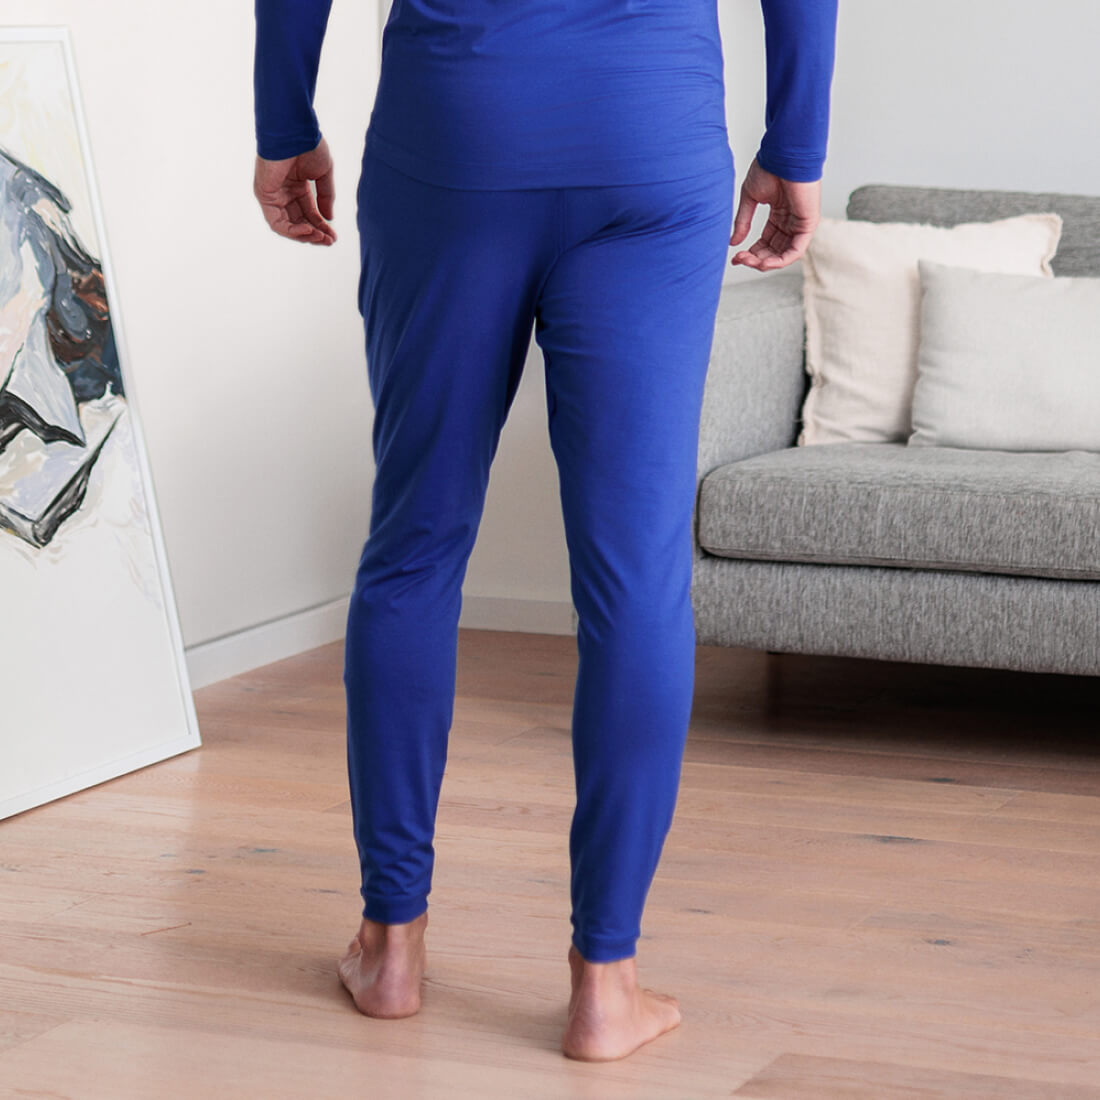 Recovery pajama pants || Azure blue